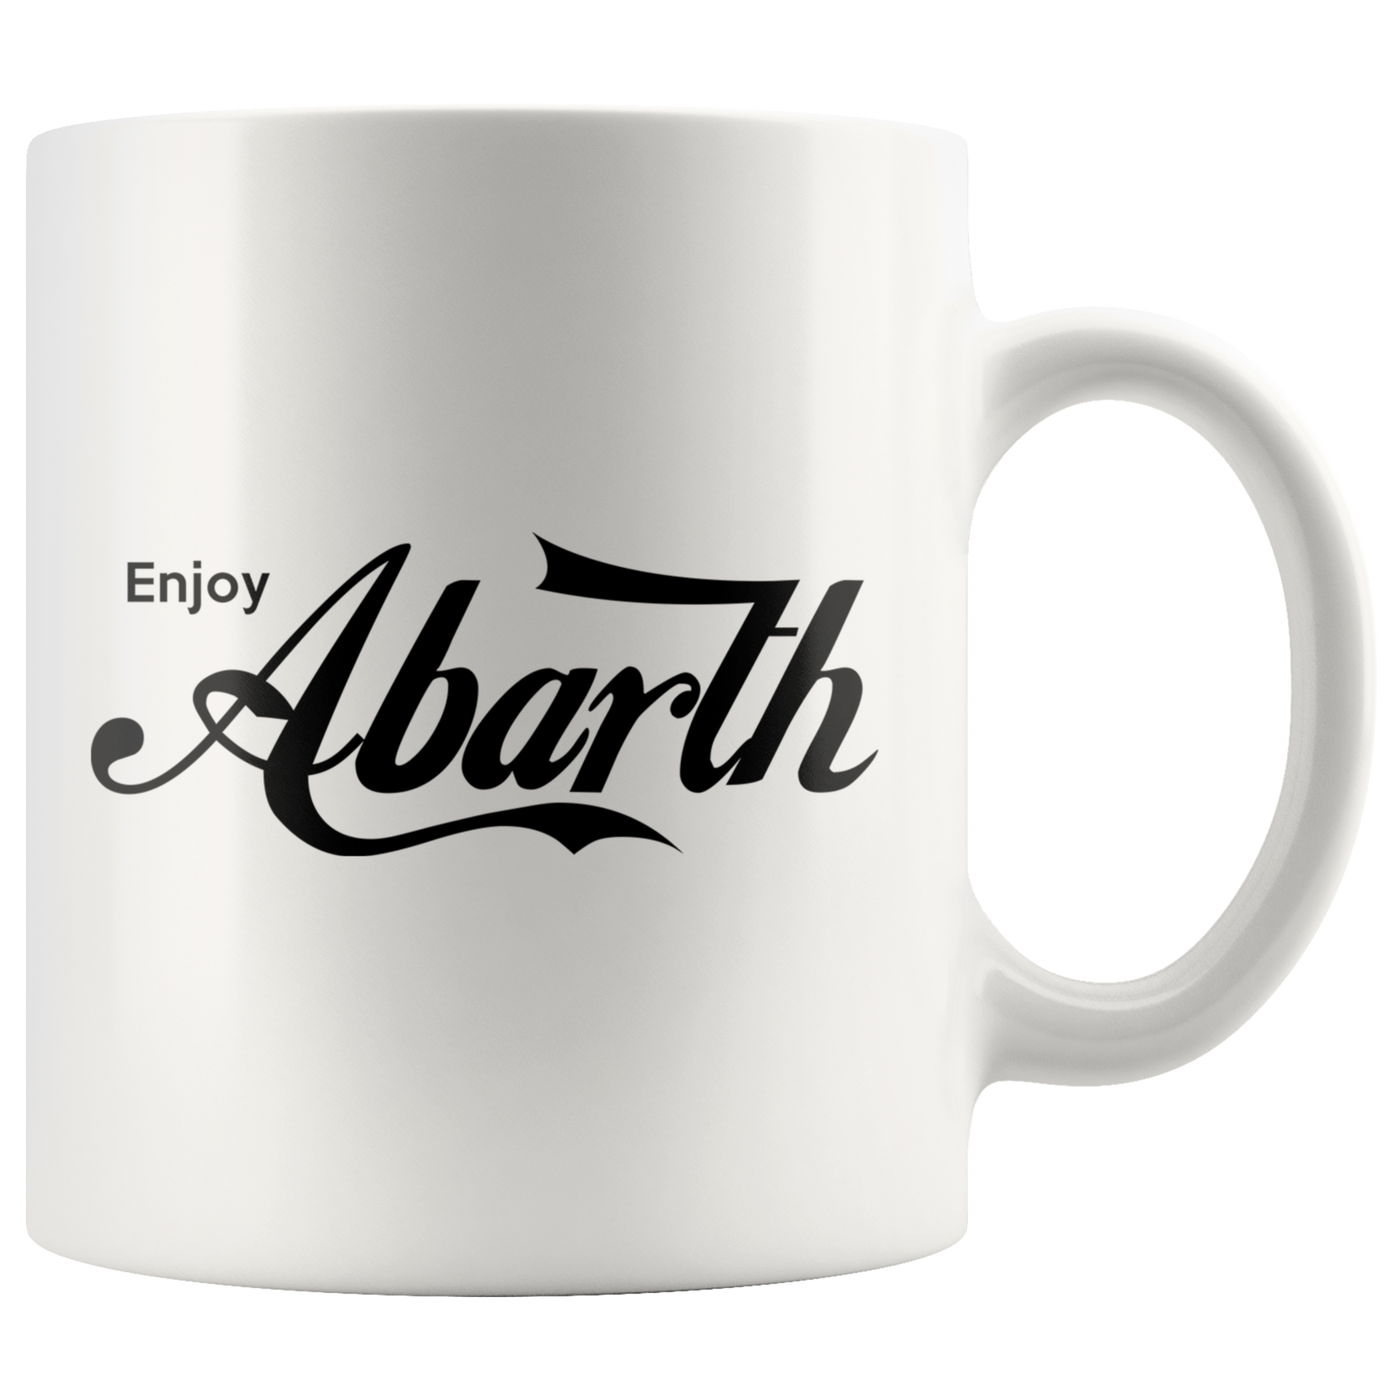 Enjoy Abarth Mug